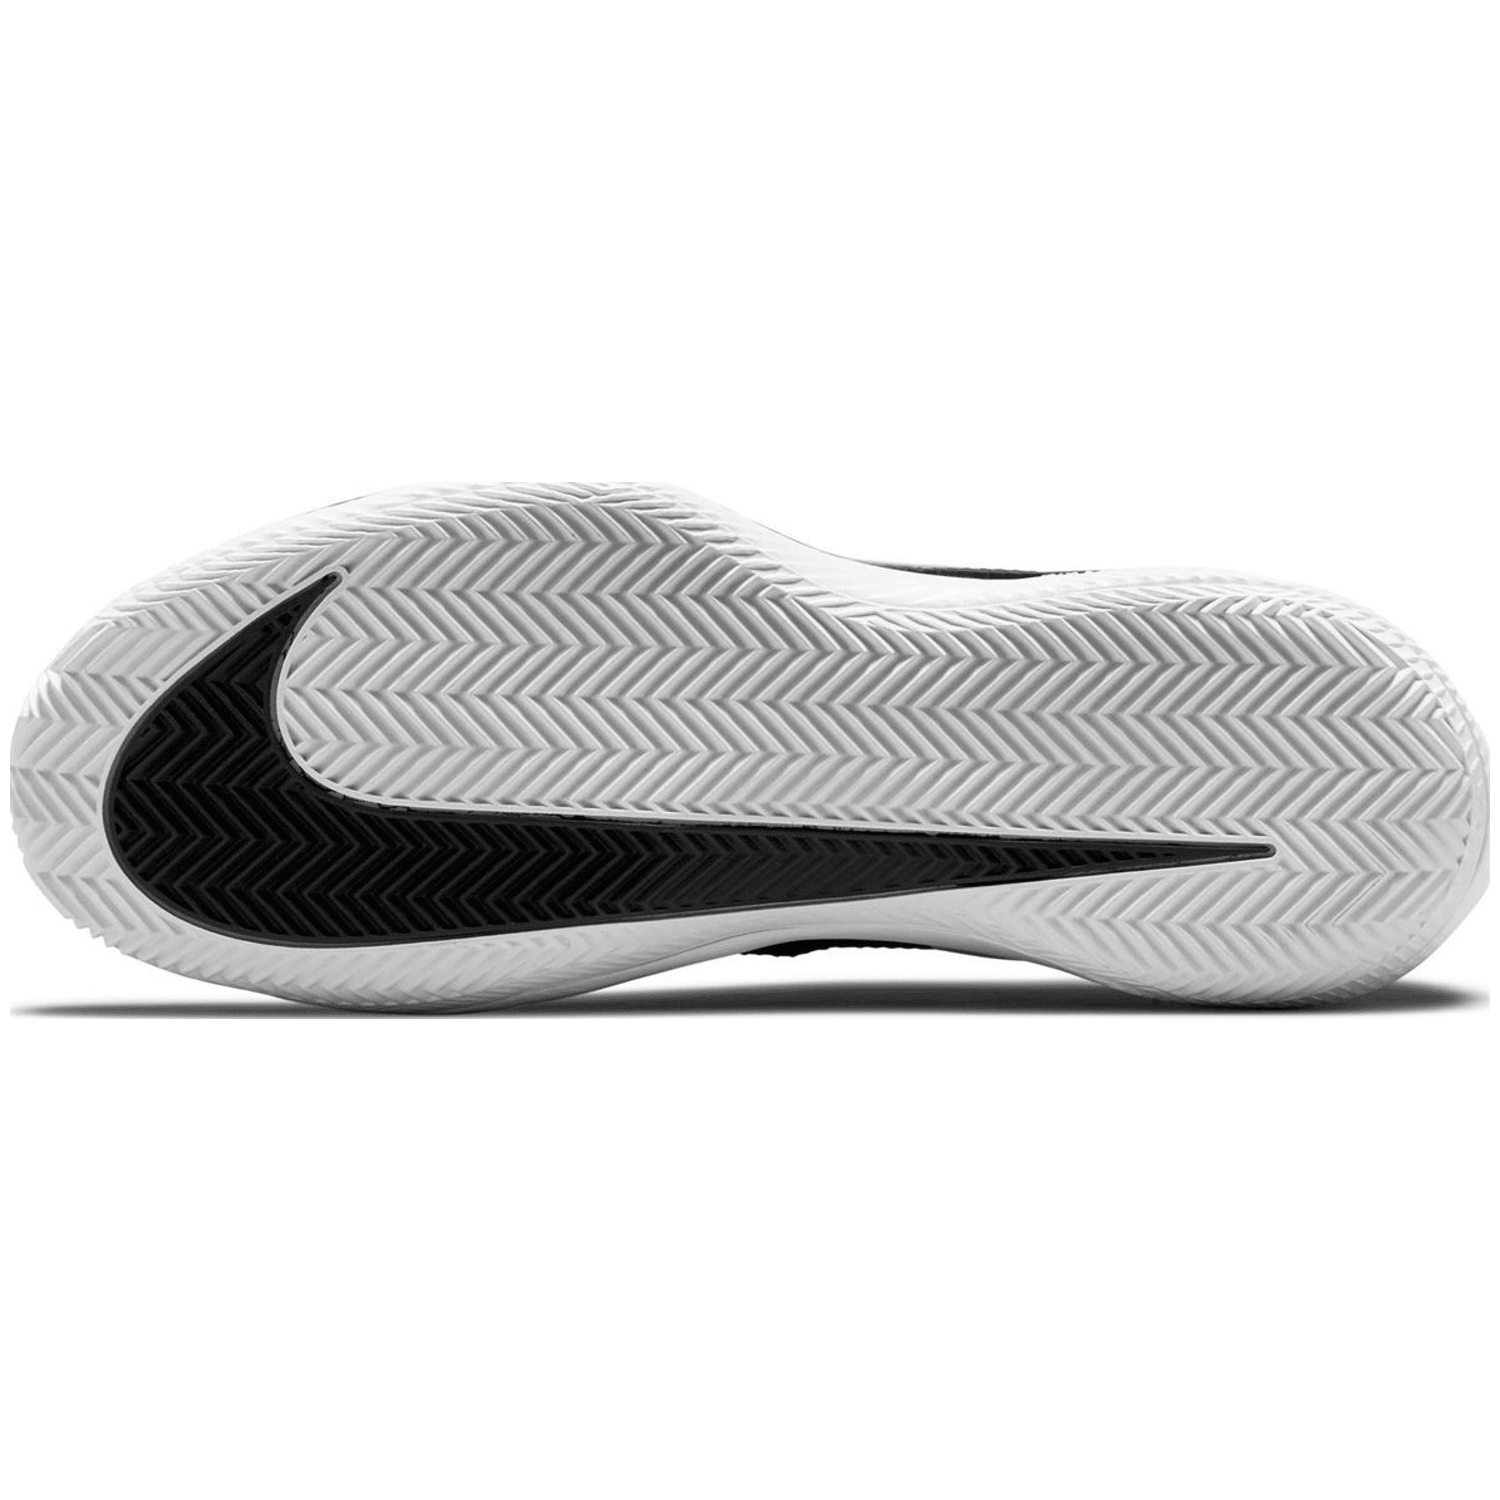 Nike NikeCourt Air Zoom Vapor Pro Clay Court Damen Tennis-Schuh